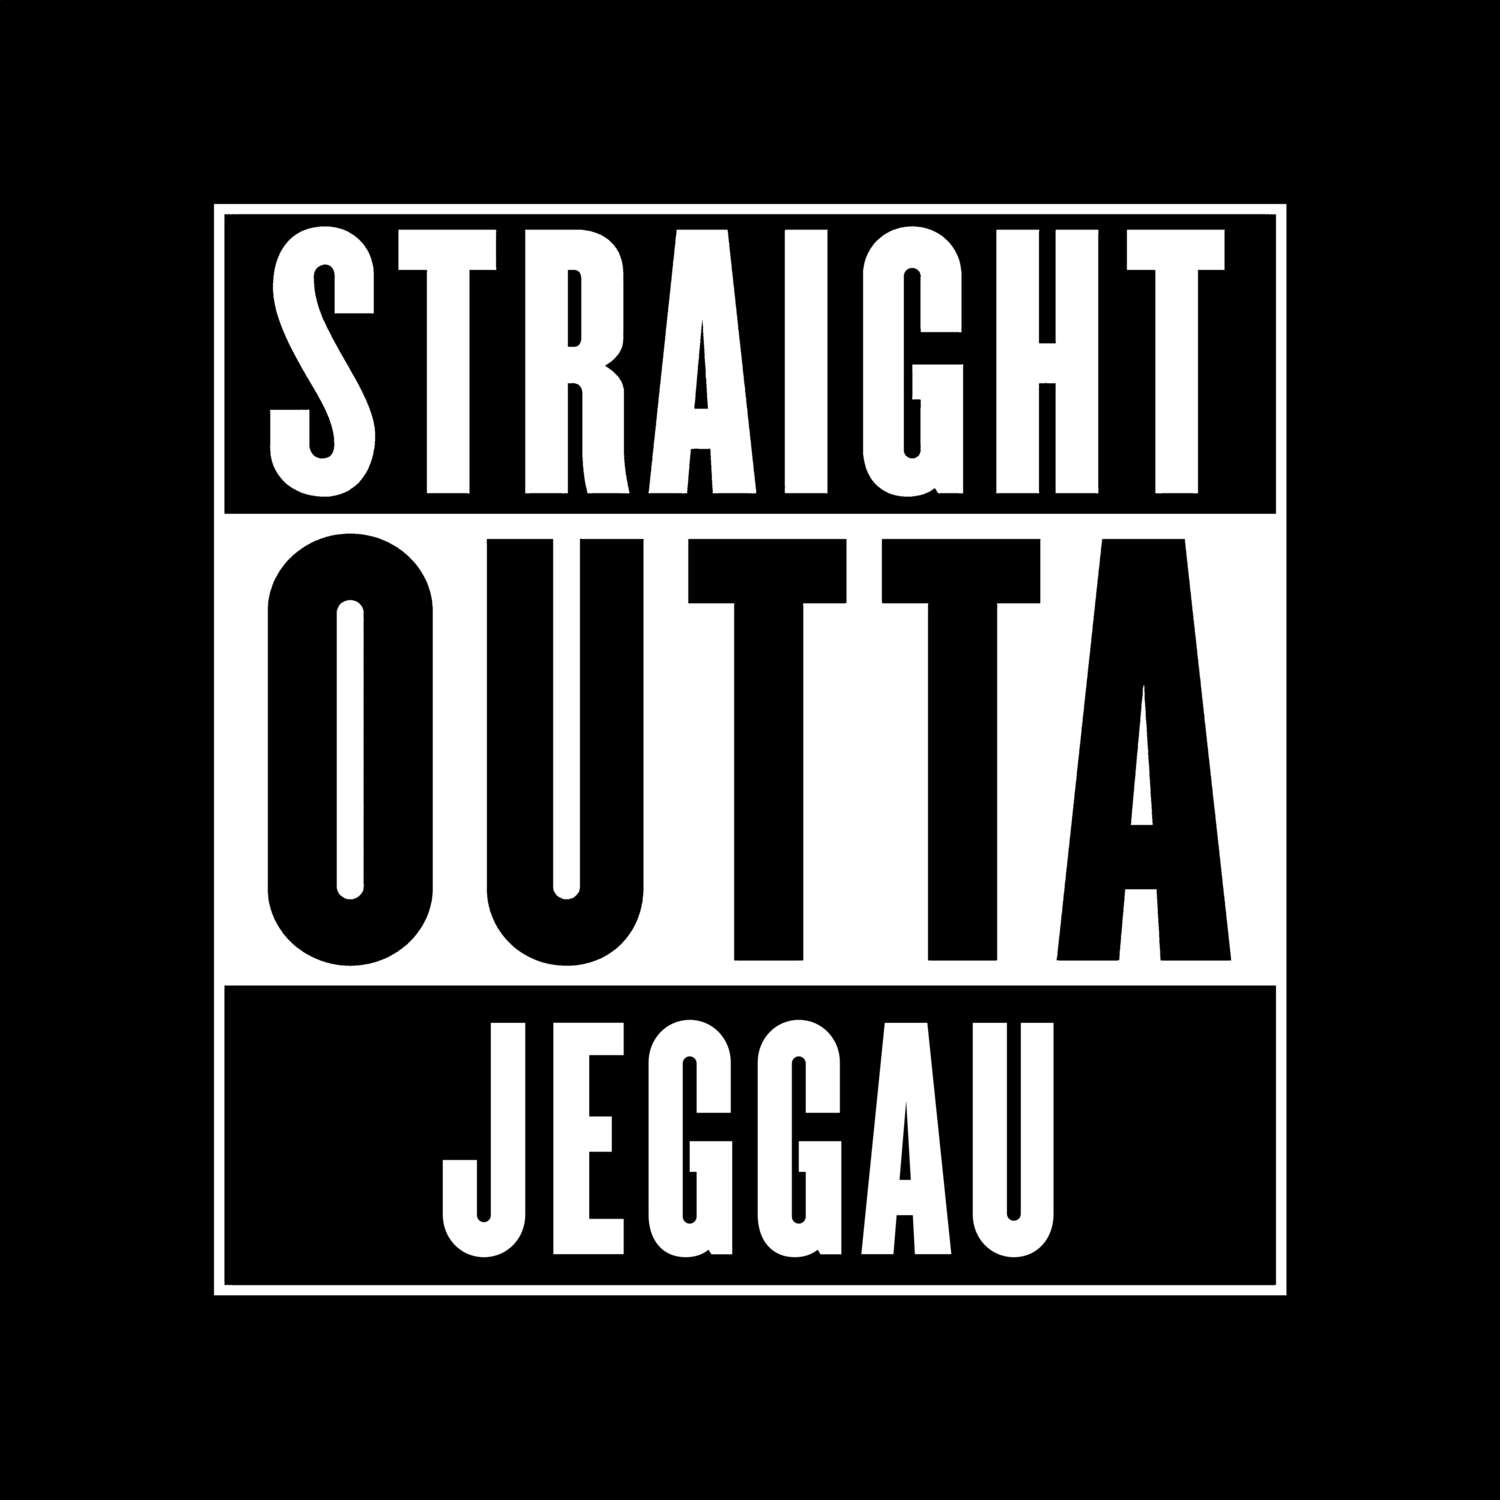 Jeggau T-Shirt »Straight Outta«